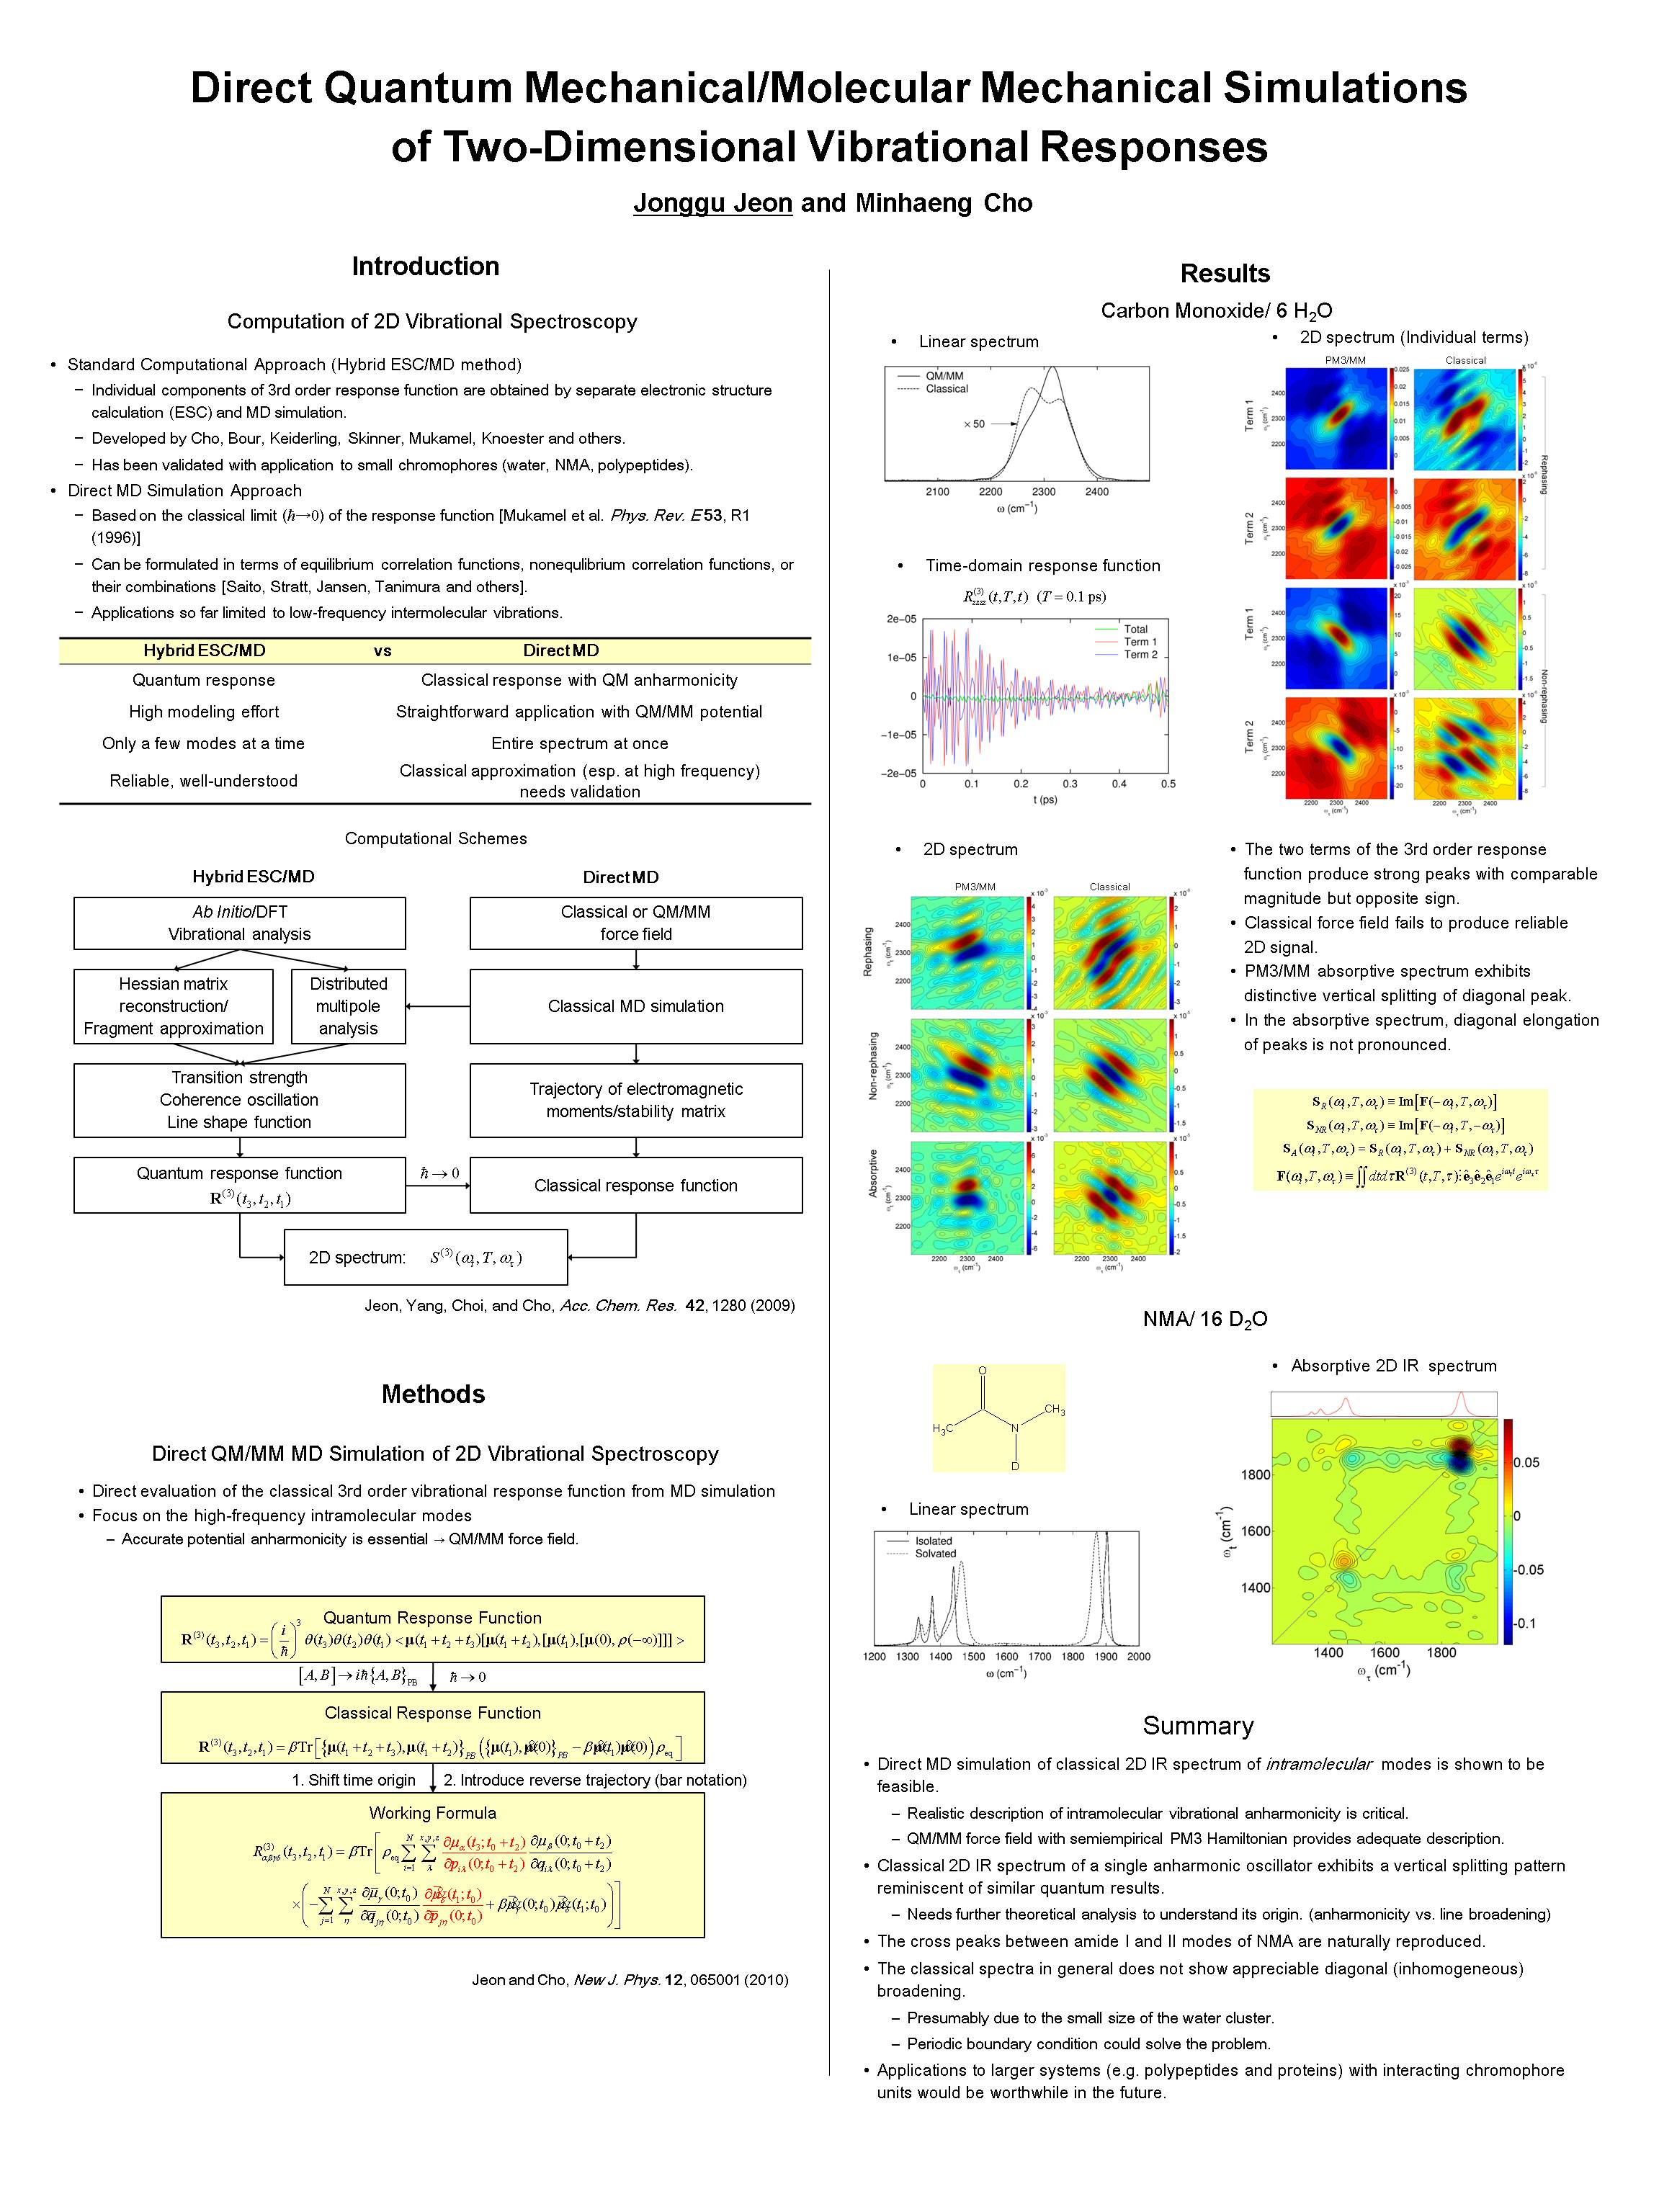 Direct Quantum Mechanical/Molecular Mechanical Simulations of Two-Dimensional Vibrational Responses 사진